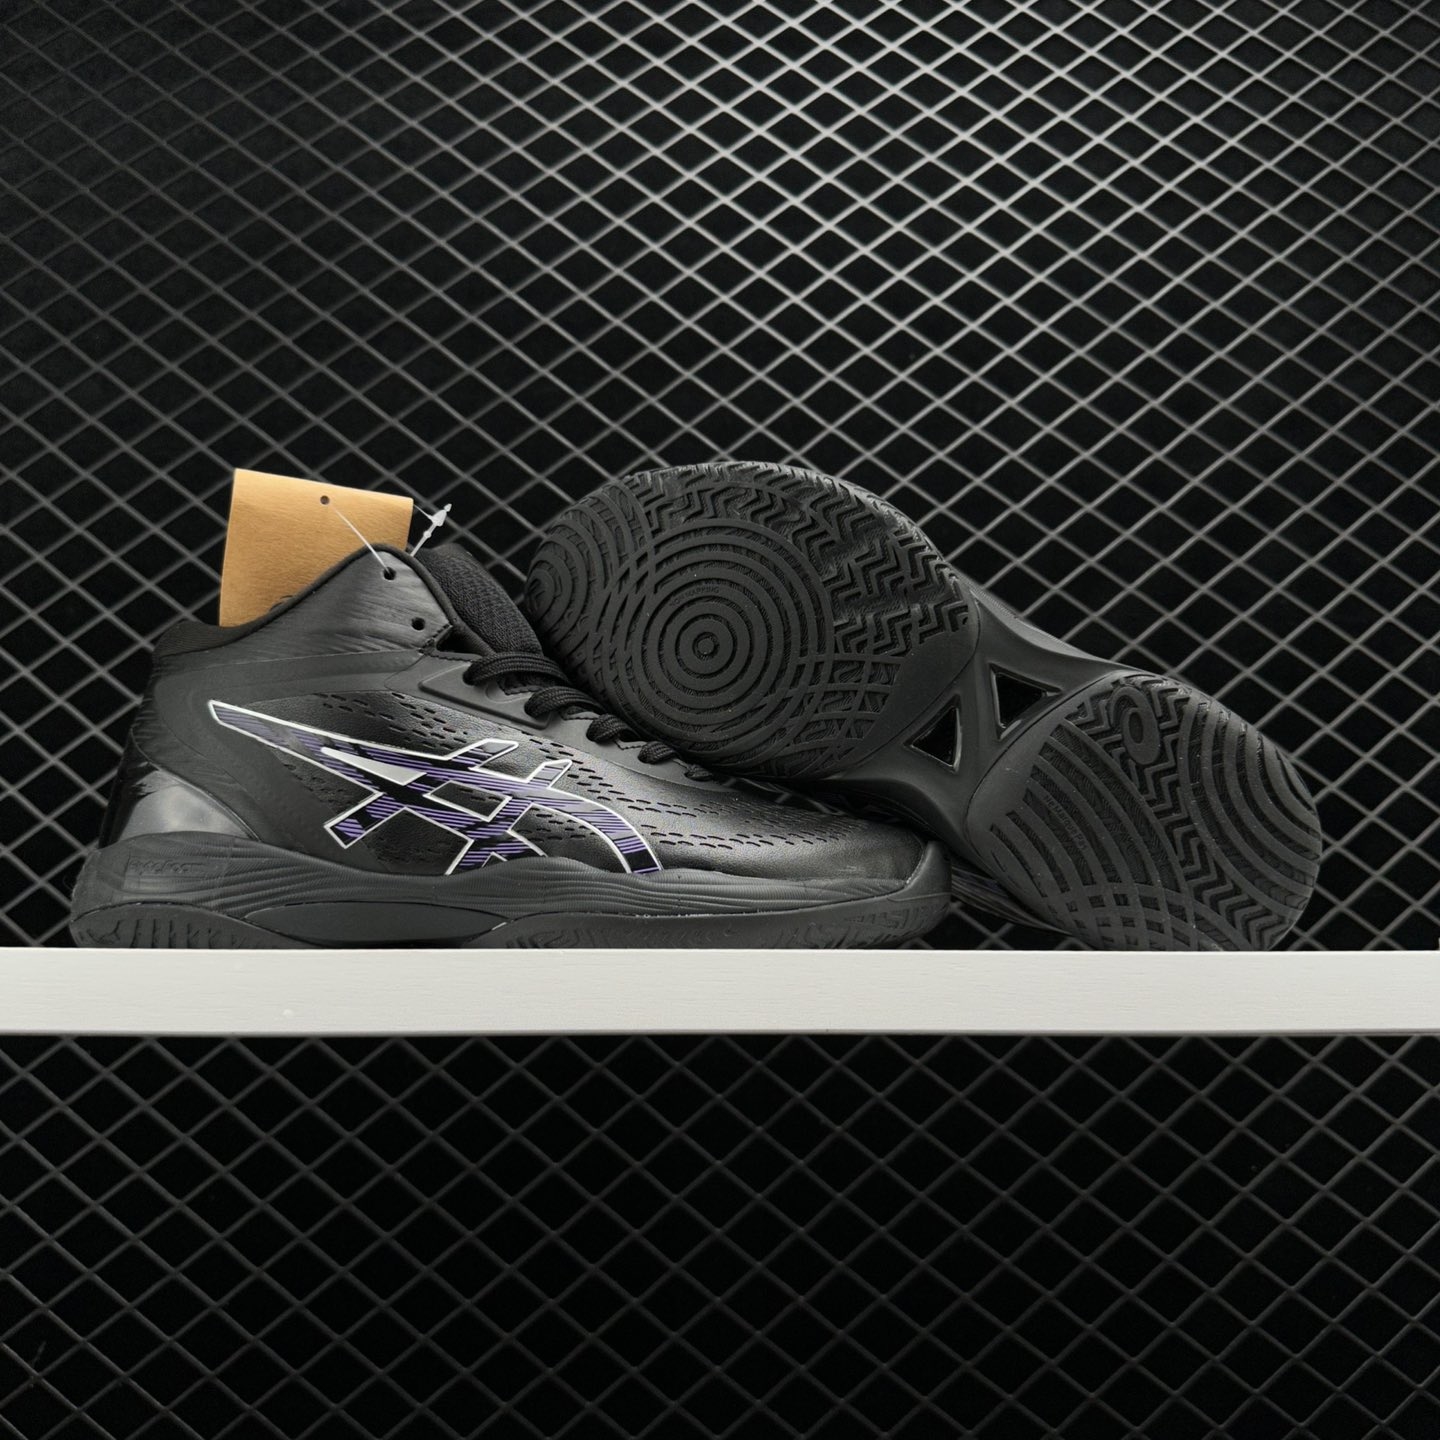 Asics GelHoop V14 Black Purple - High-Performance Basketball Shoes